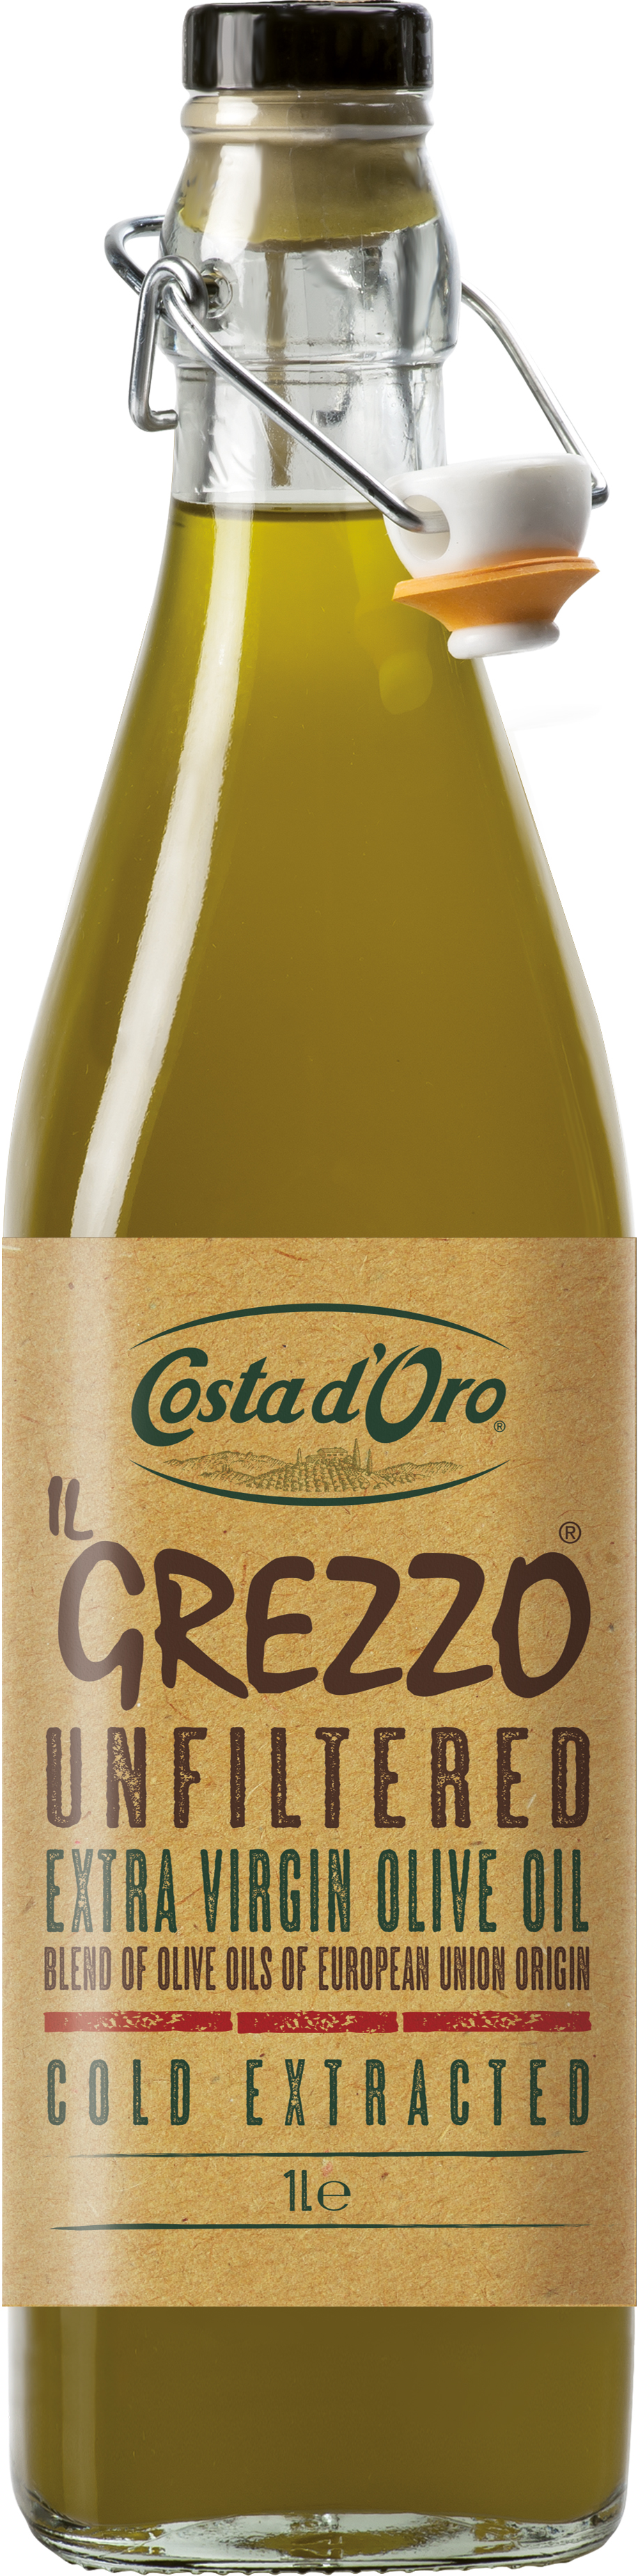 Акция на Оливковое масло Costa d'Oro IL Grezzo Extra Virgin 1 л нефильтрованное (8007270012582) от Rozetka UA